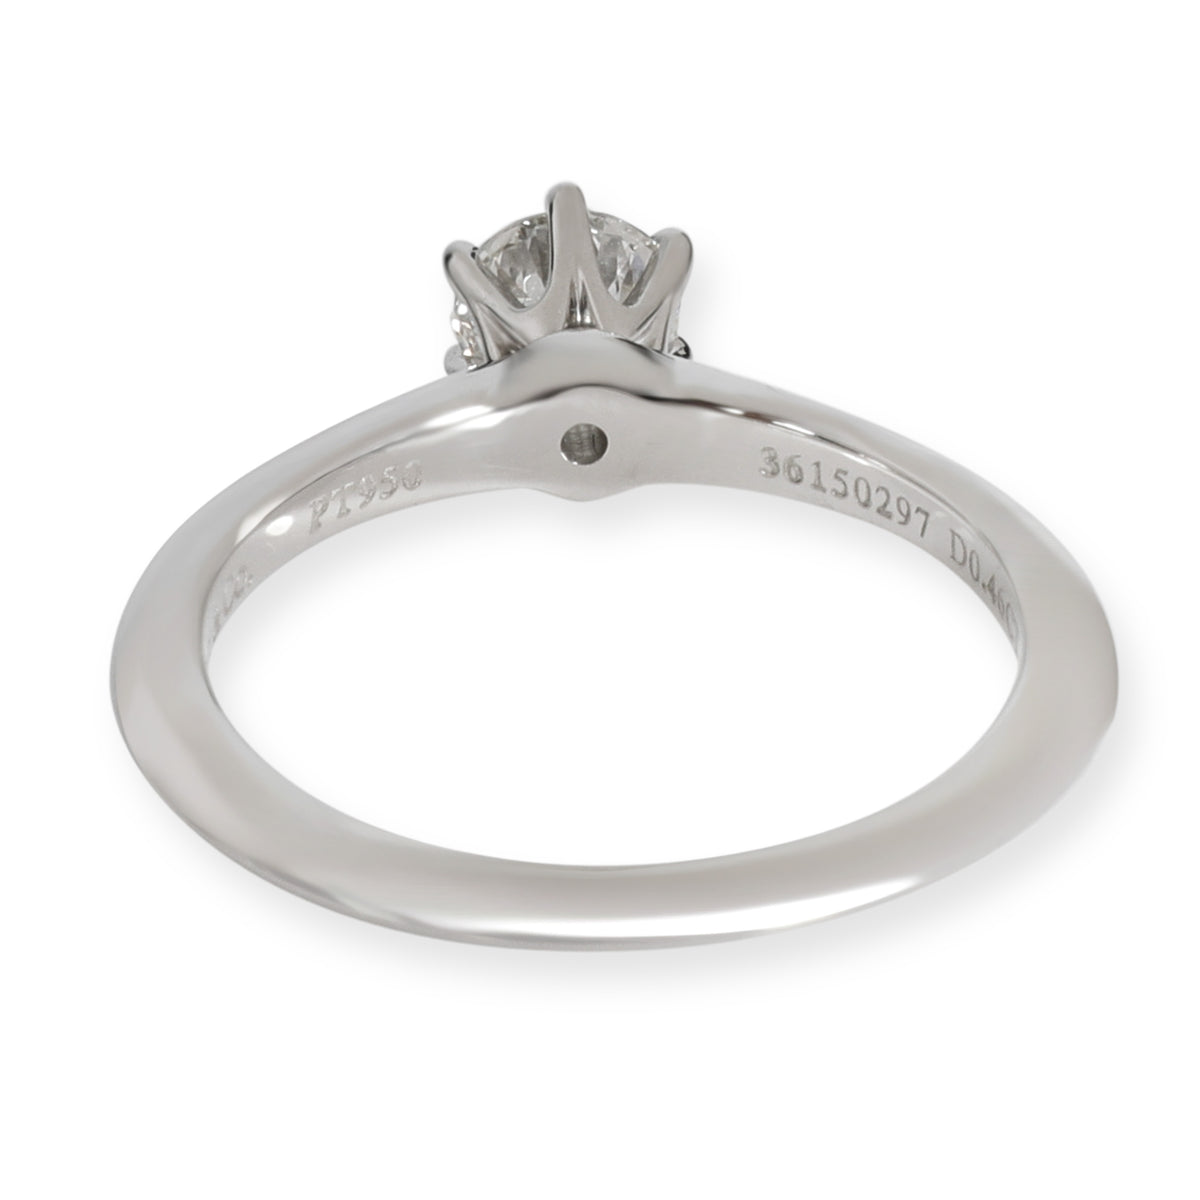 Tiffany & Co. Solitaire Diamond Engagement Ring in Platinum H VS1 0.46 CTW